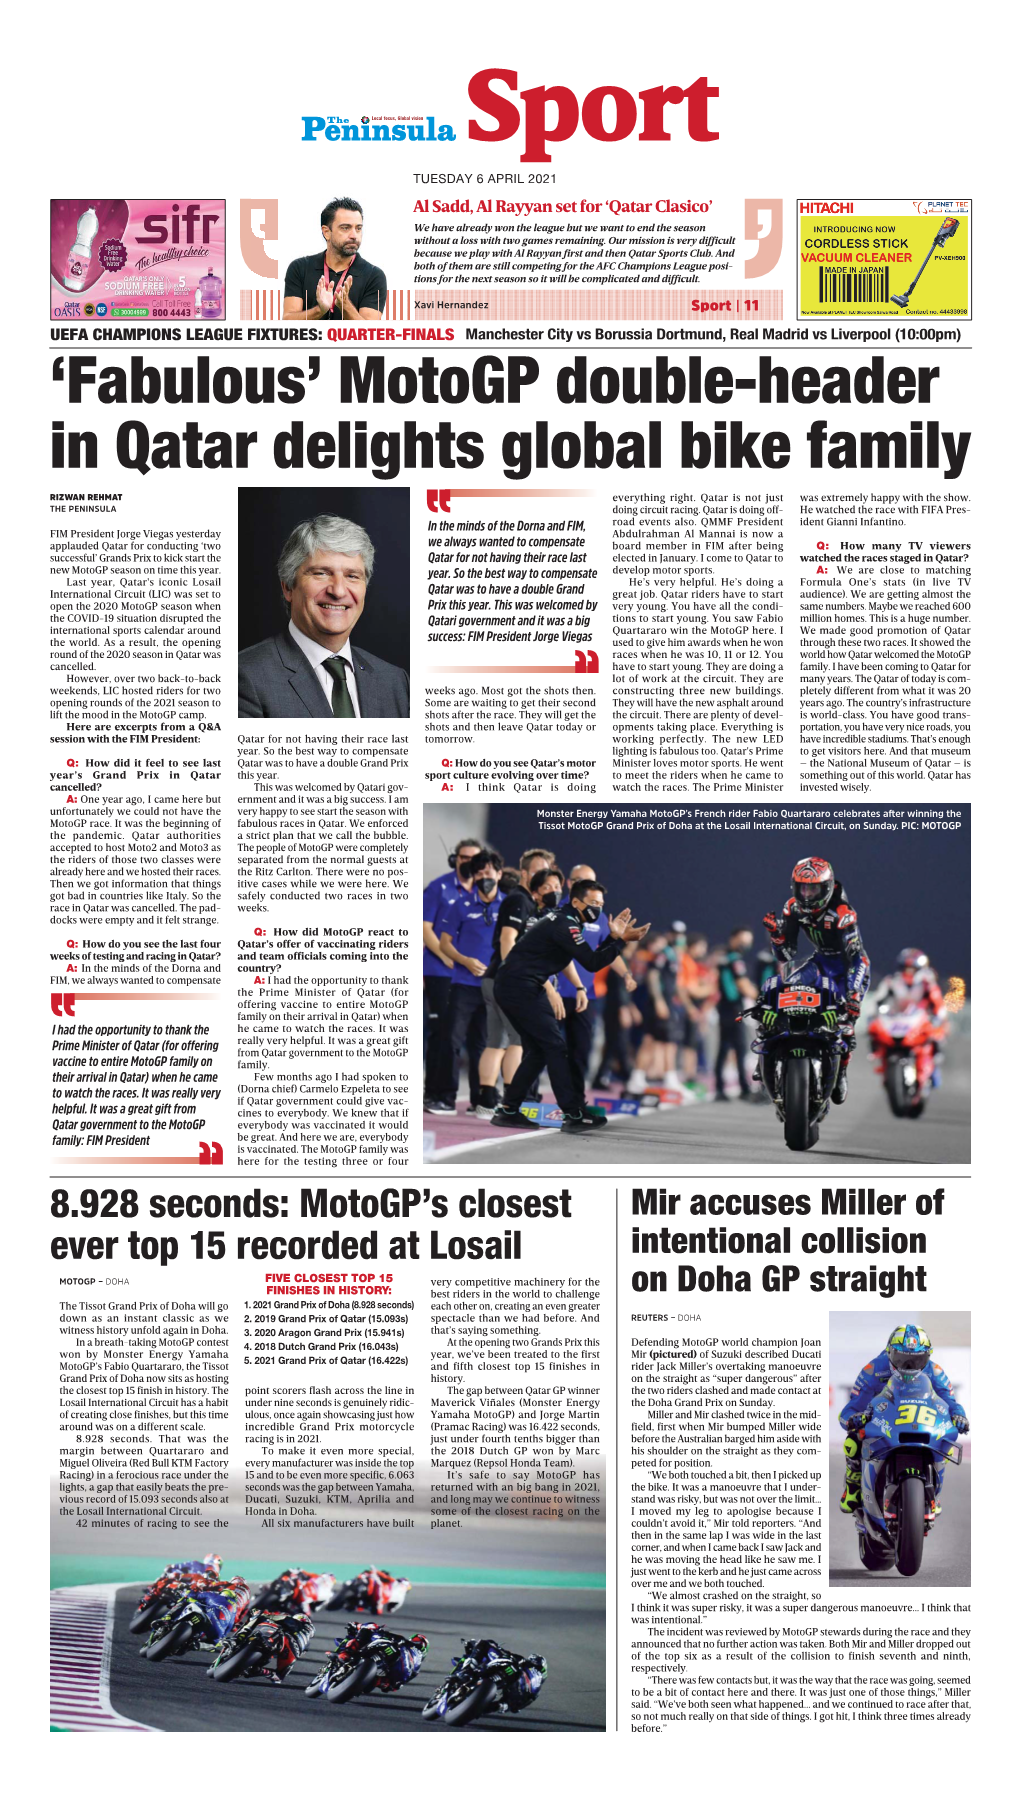 Motogp Double-Header in Qatar Delights Global Bike Family